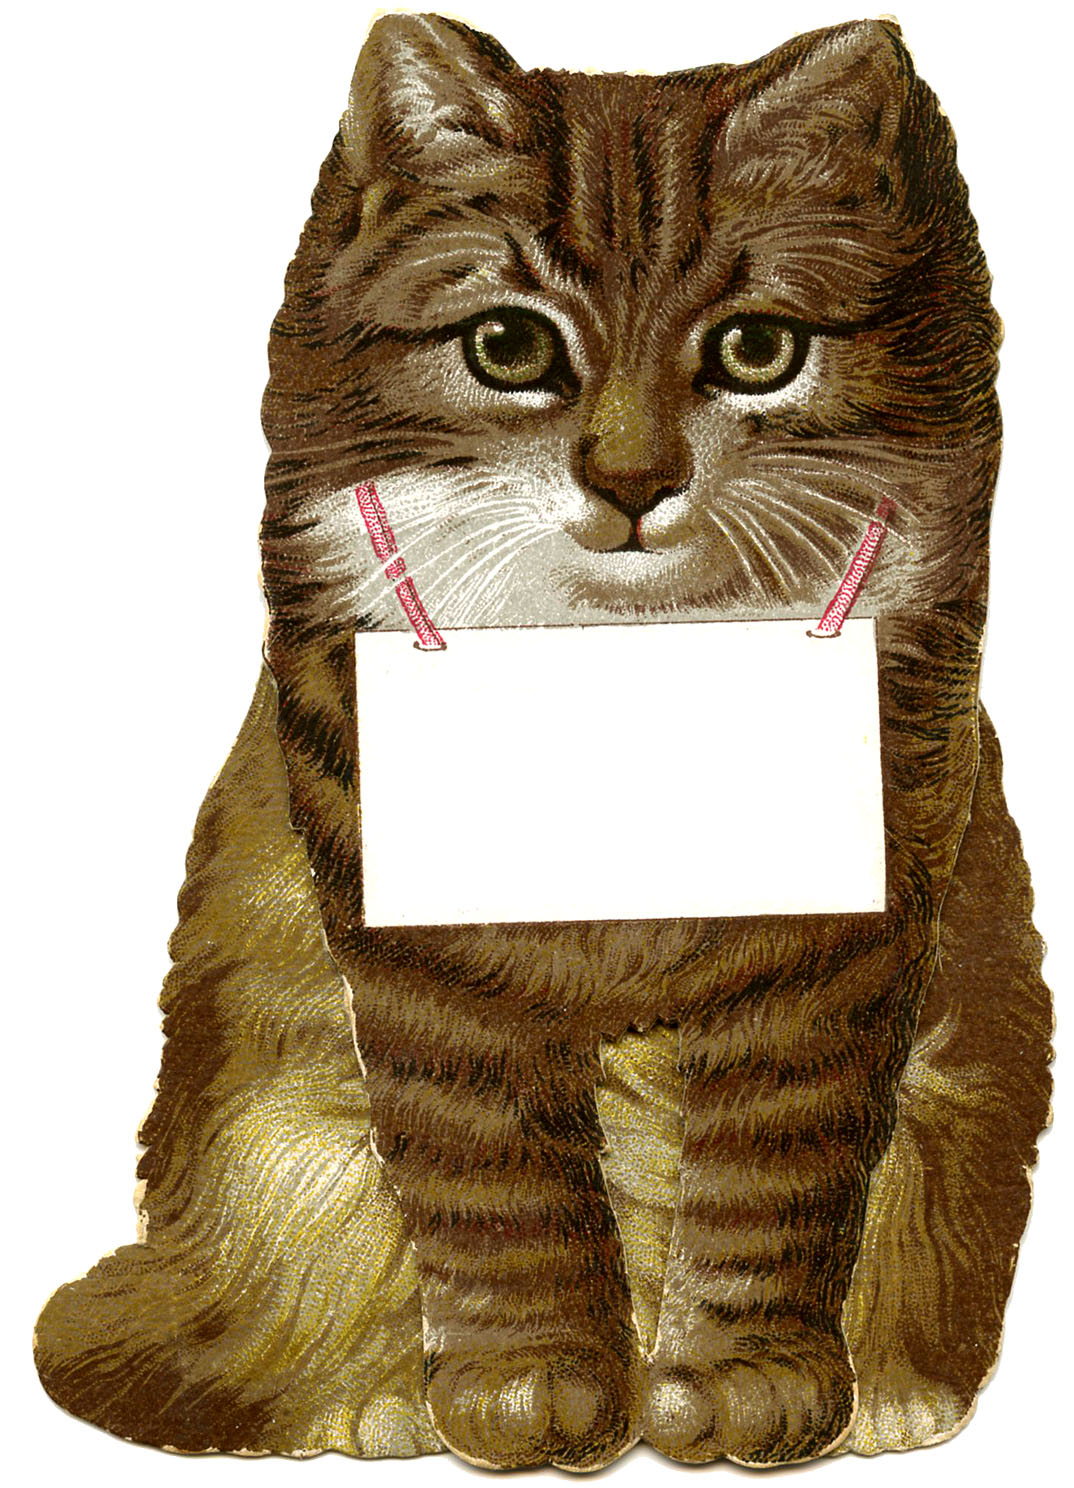 Vintage Clip Art - Cutest Cat Image Ever! - The Graphics Fairy